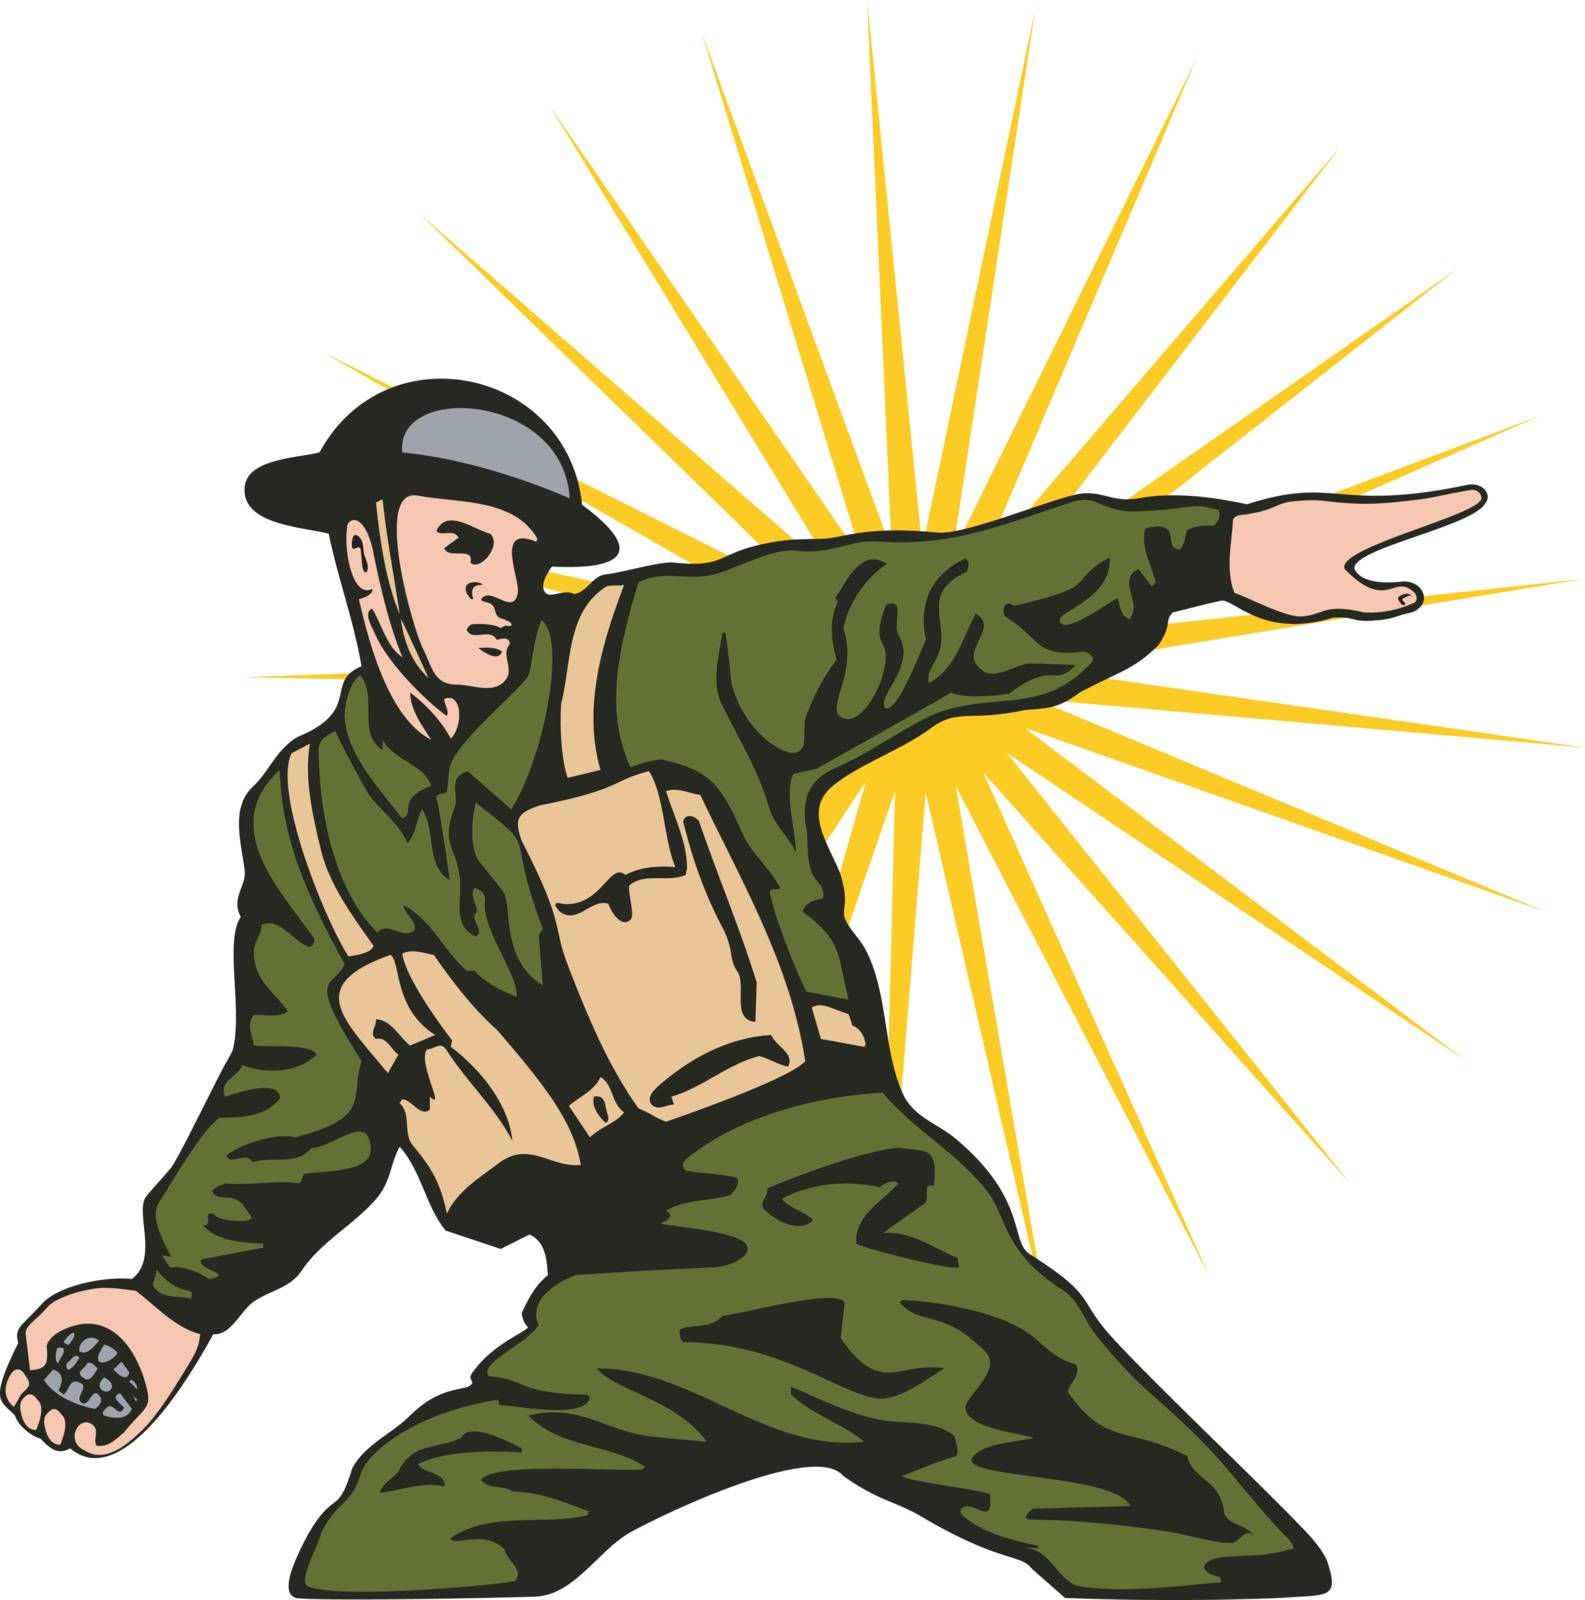 Soldier Throwing Grenade by patrimonio